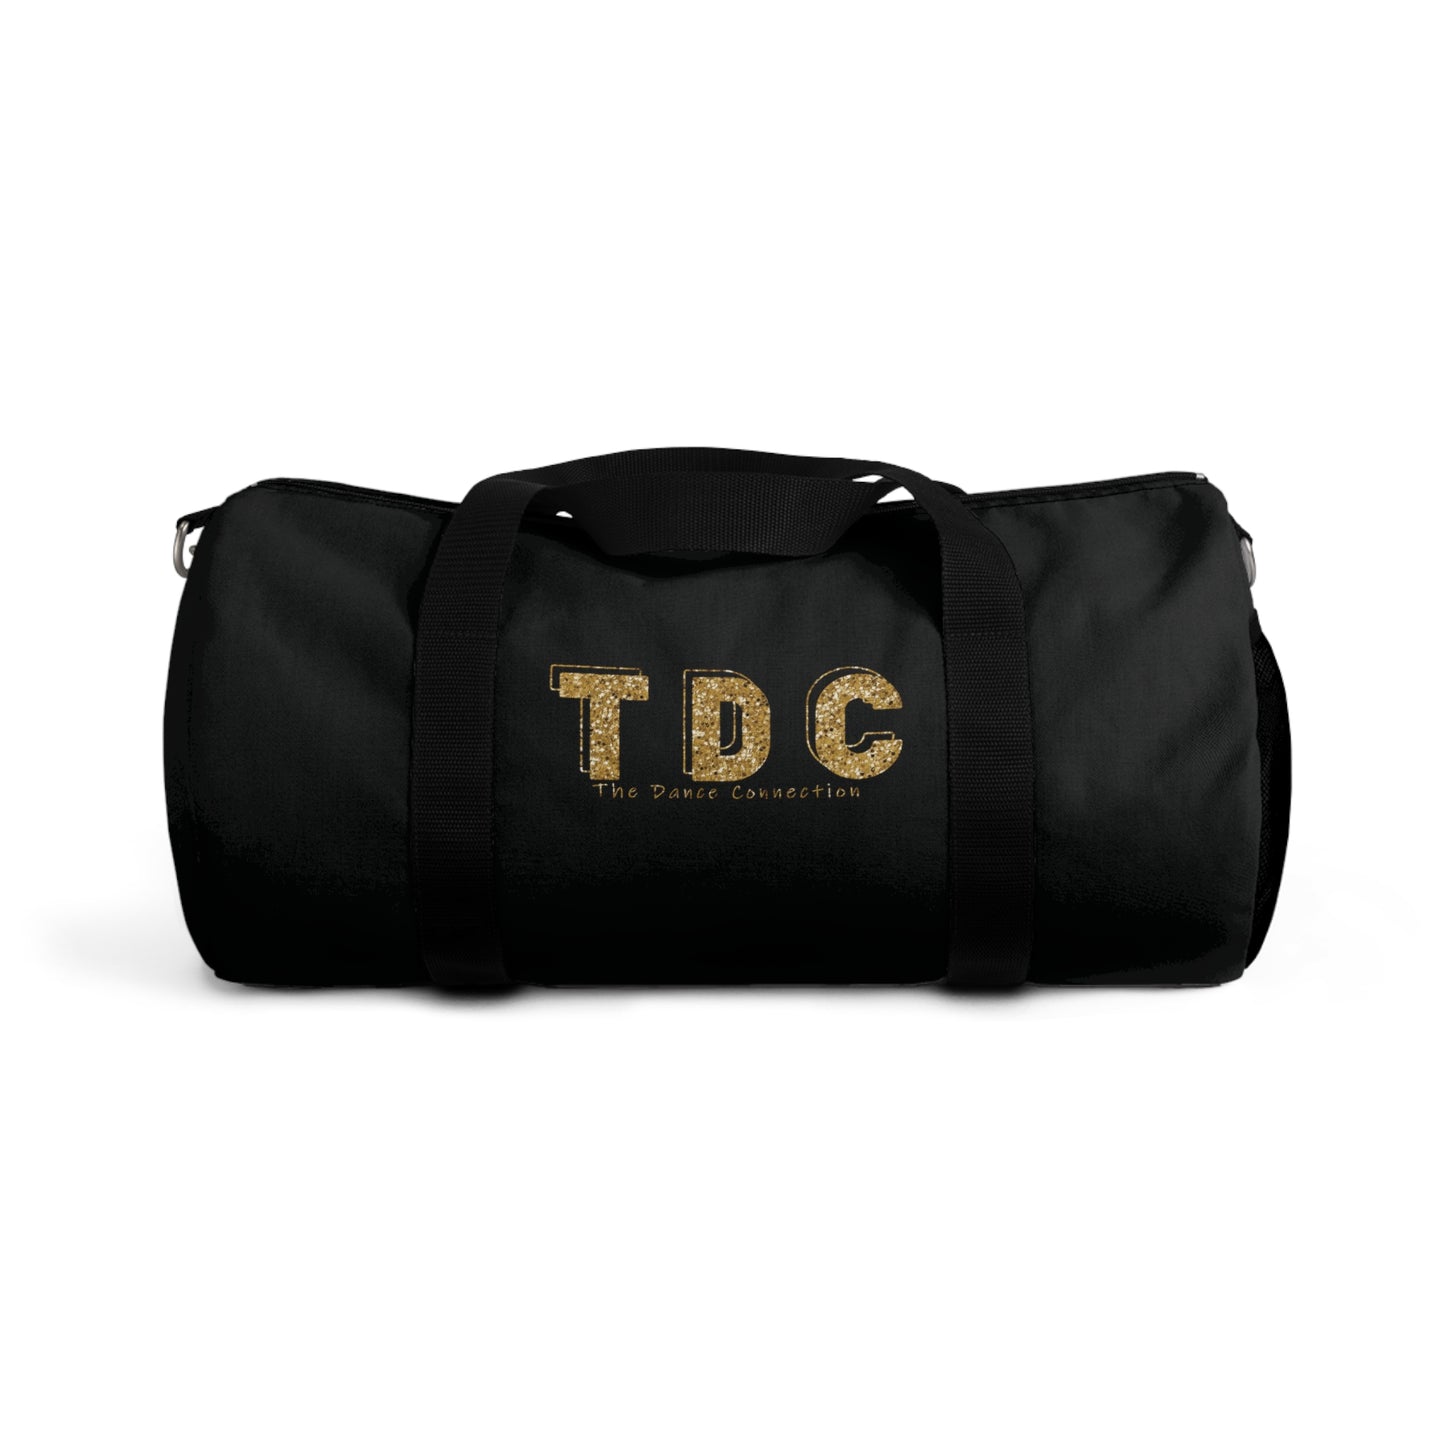 The Dance Connection Duffel Bag